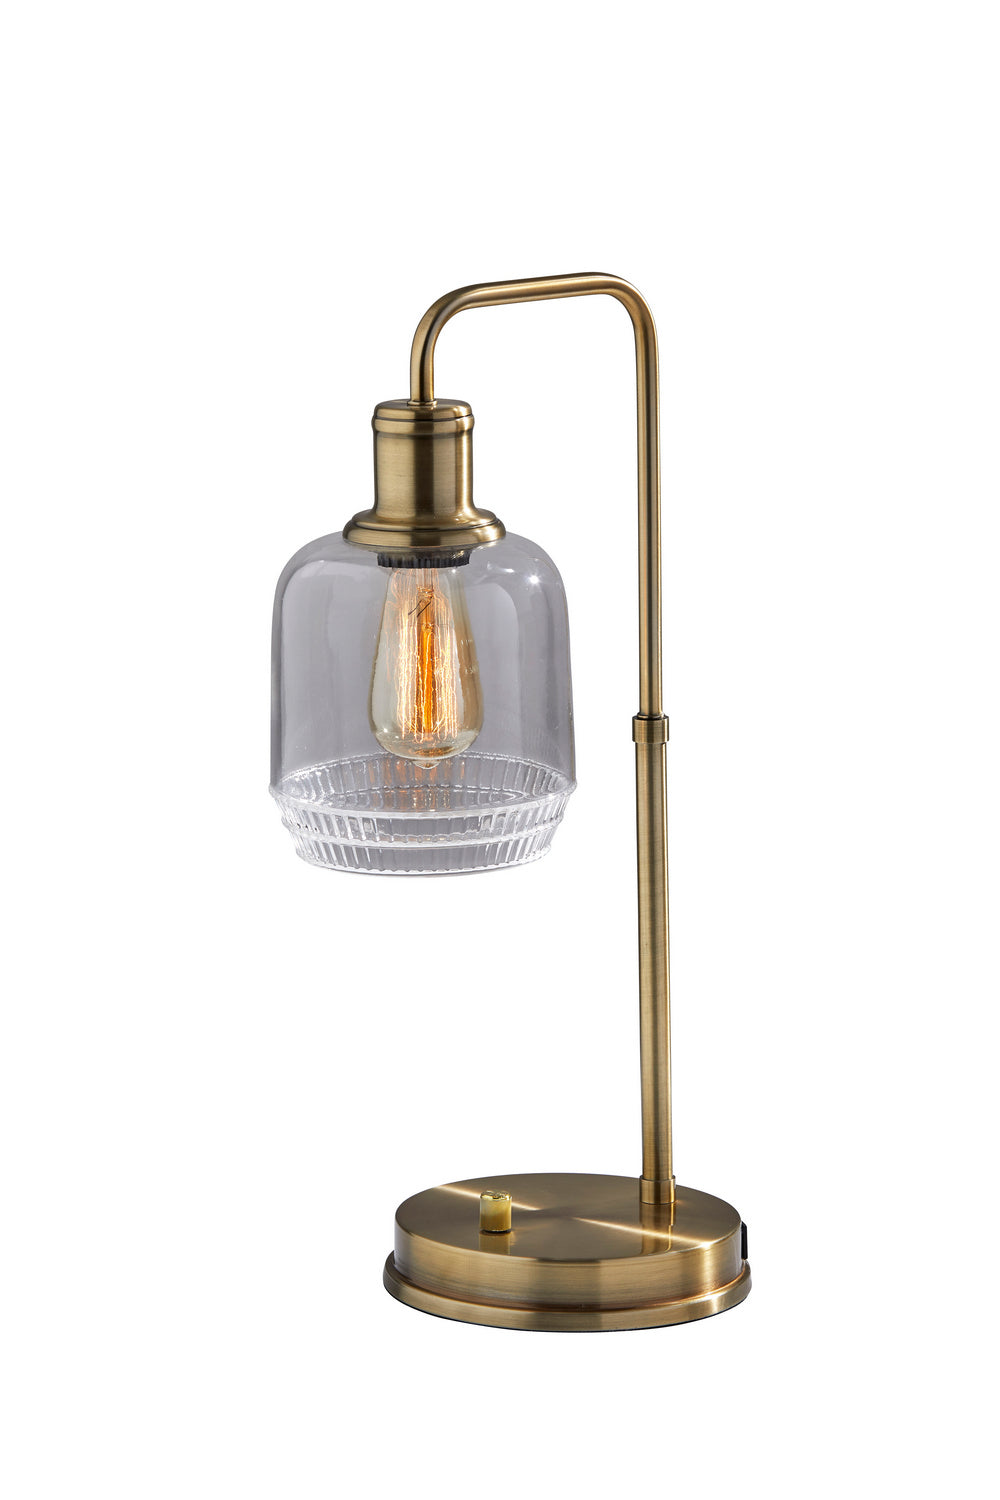 Adesso Home SL3712-21  Barnett Lamp Antique Brass